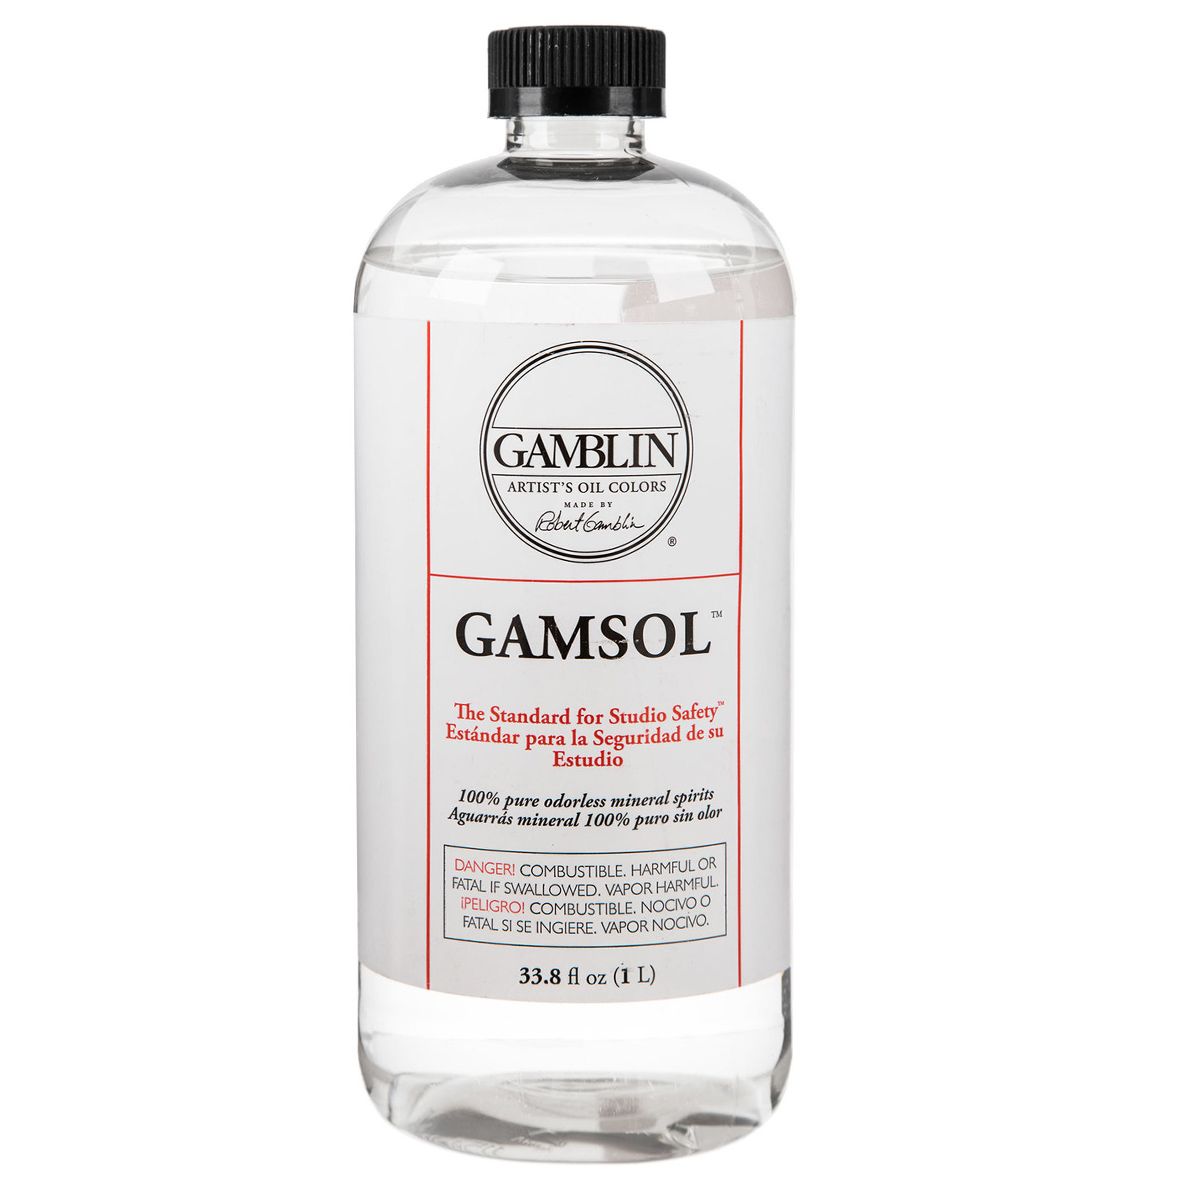 Gamblin Gamsol Odorless Mineral Spirits 16 Oz Bottle